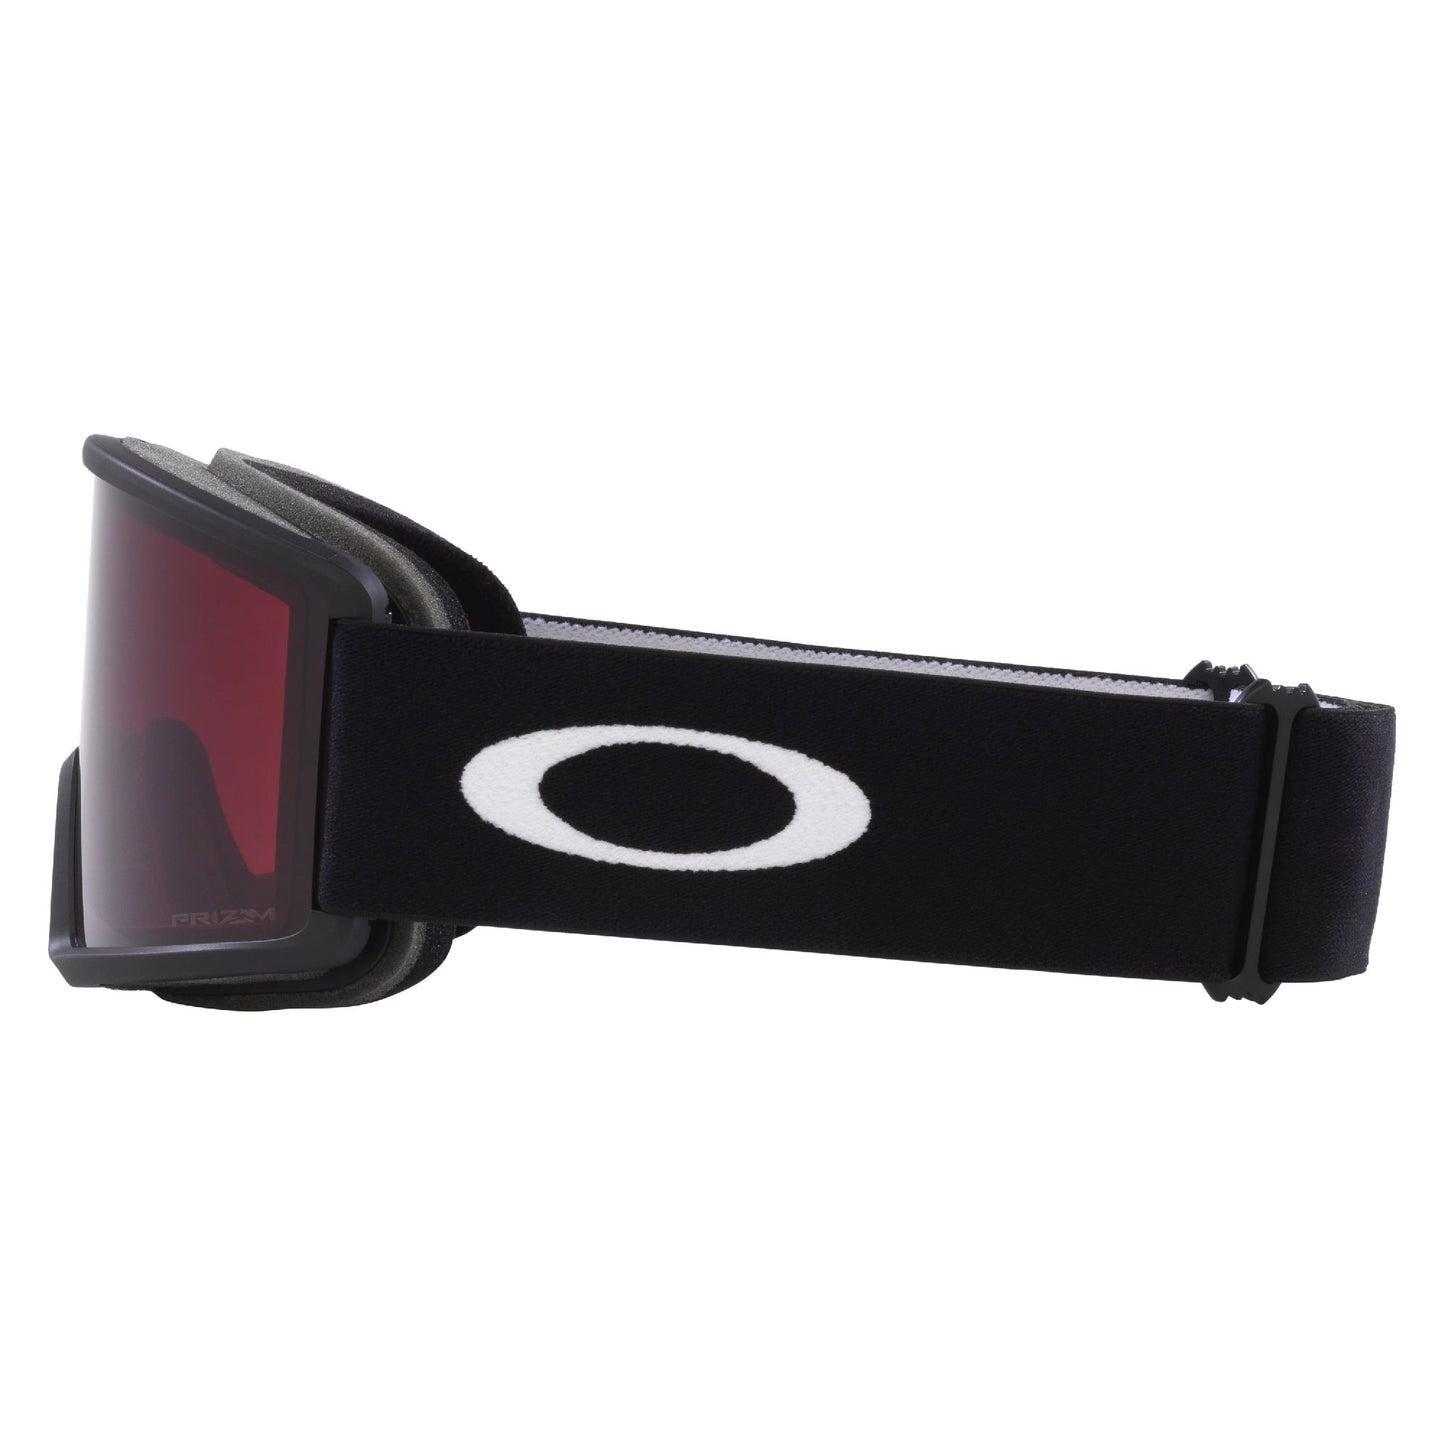 Oakley Target Line L Snow Goggles Matte Black / Prizm Dark Grey Snow Goggles